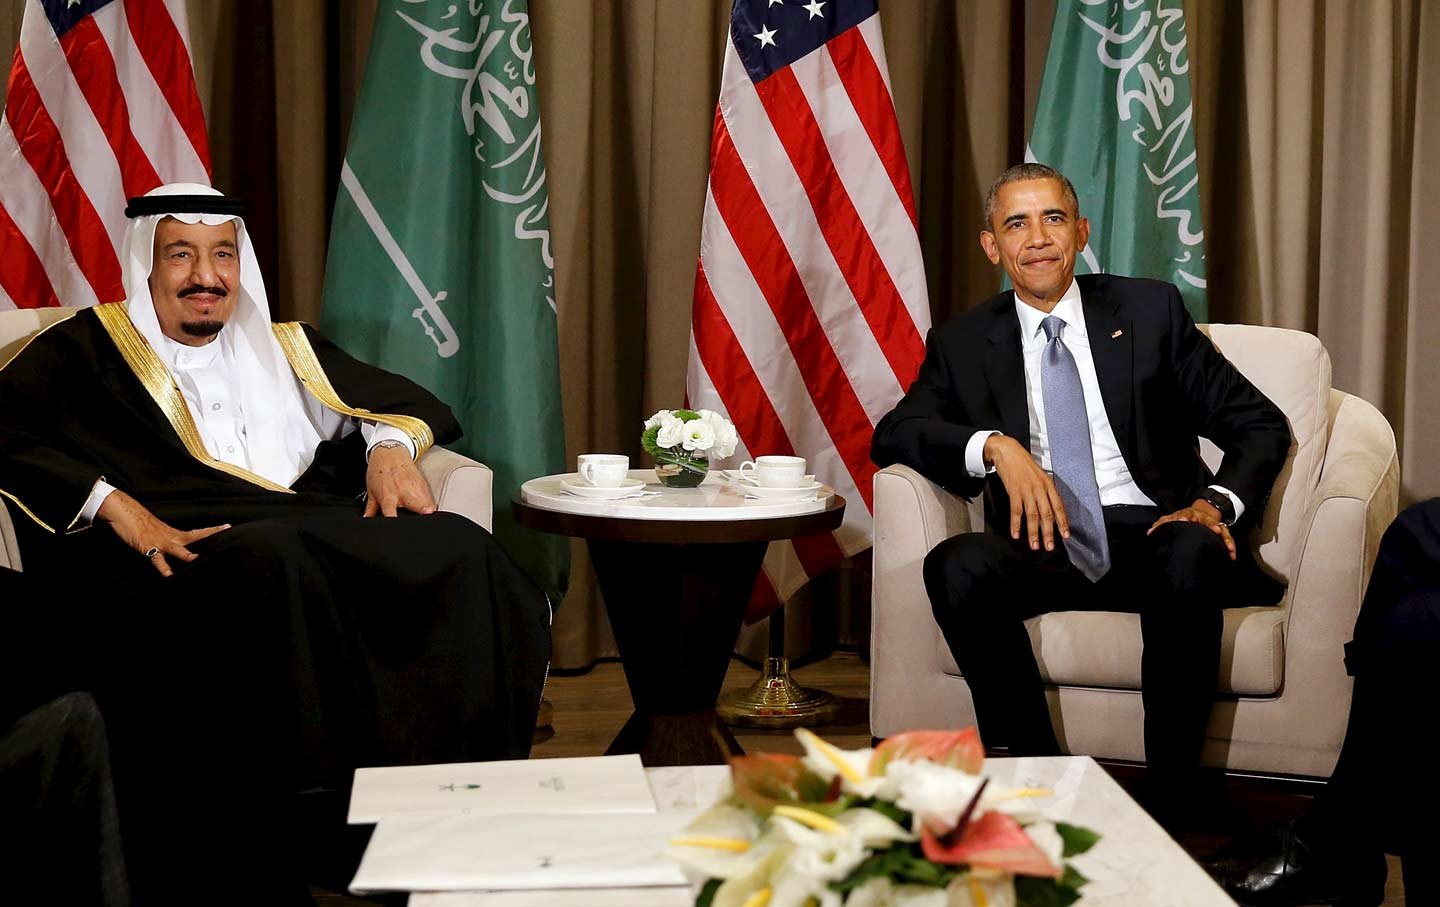 Barack Obama and Saudi Arabia's King Salman